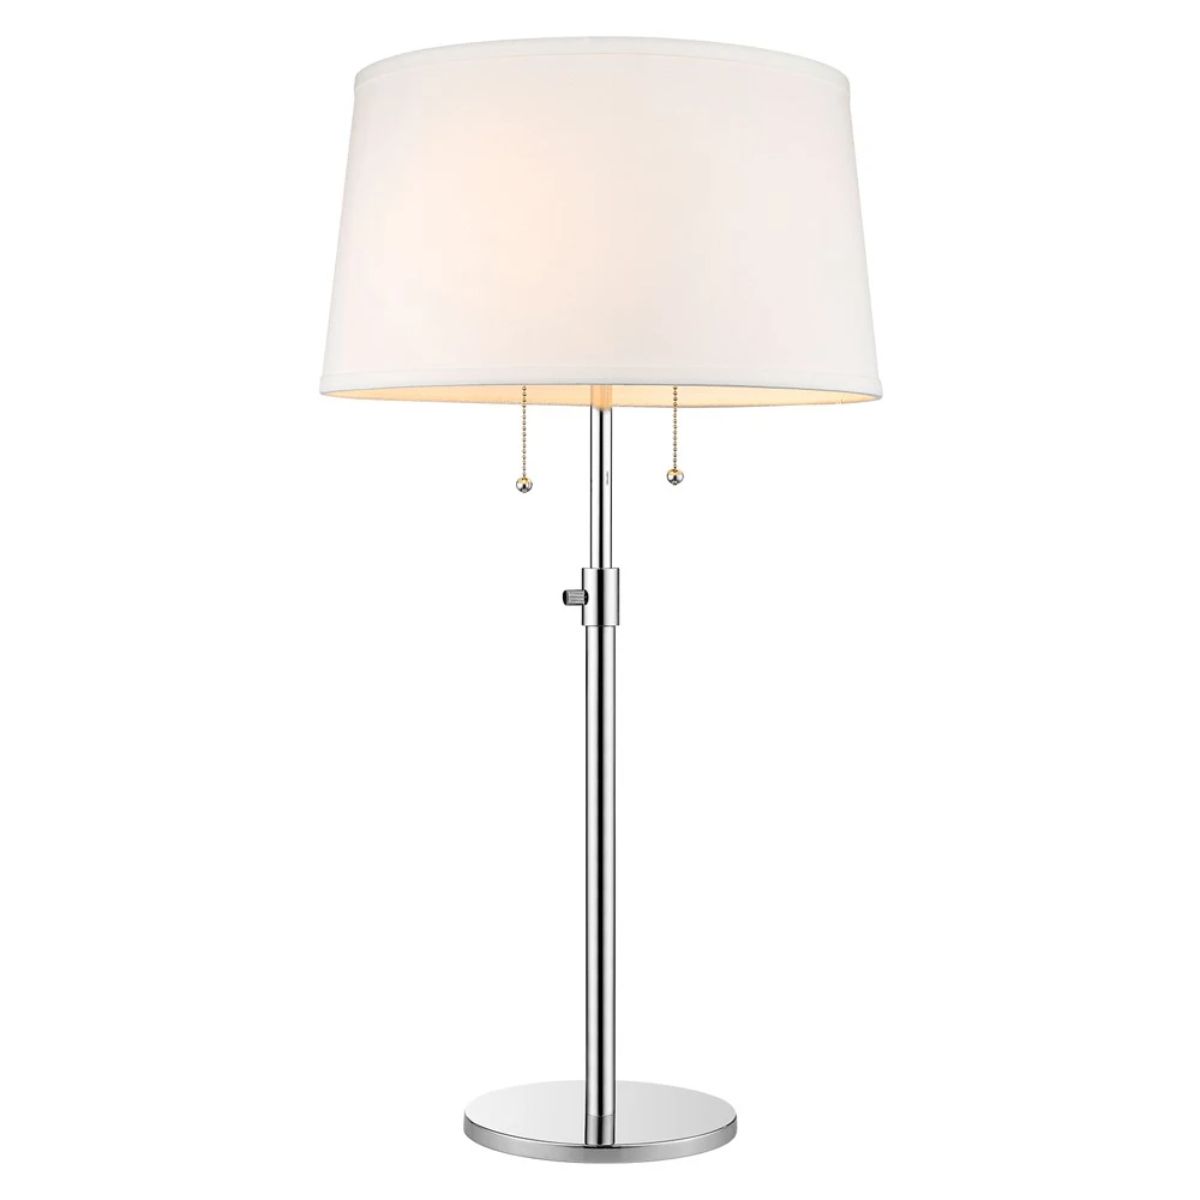 Urban Basic 2 Lights Adjustable Table Lamp Polished Chrome Finish